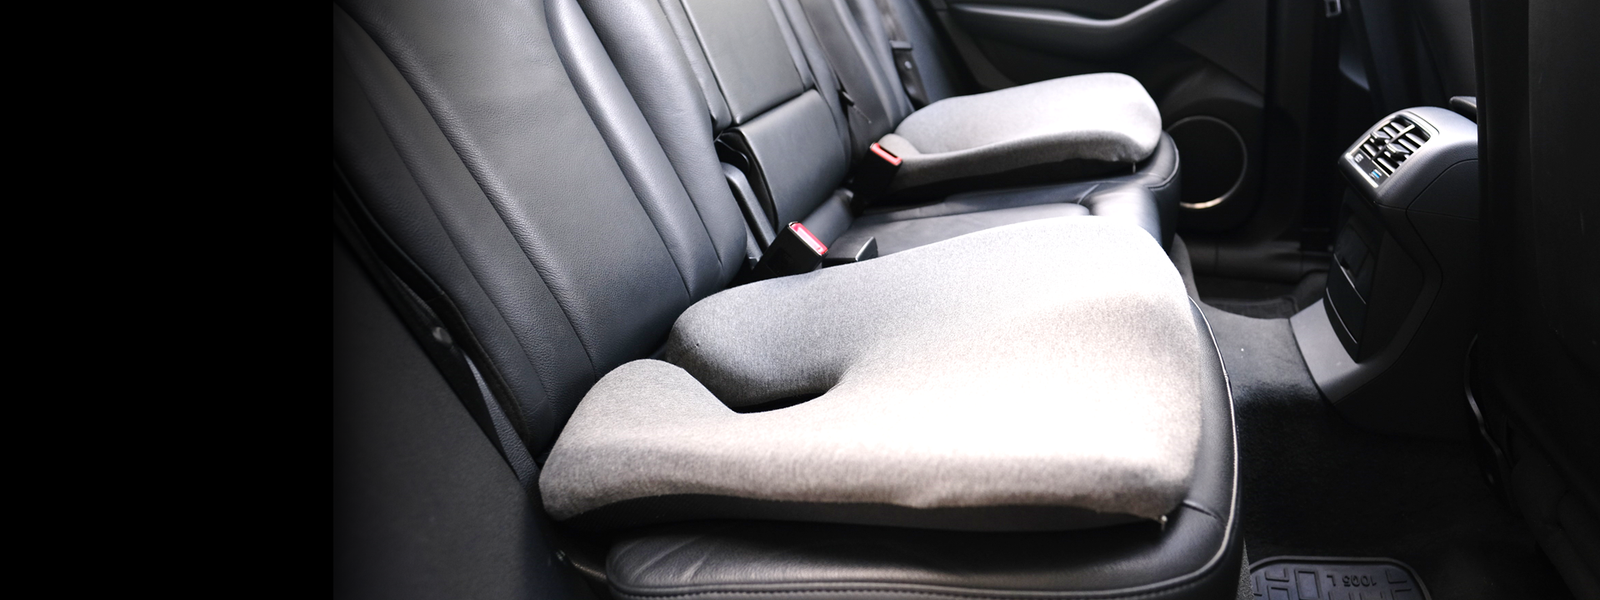 Driver Rest Ergonomic Arm Support Cushion 